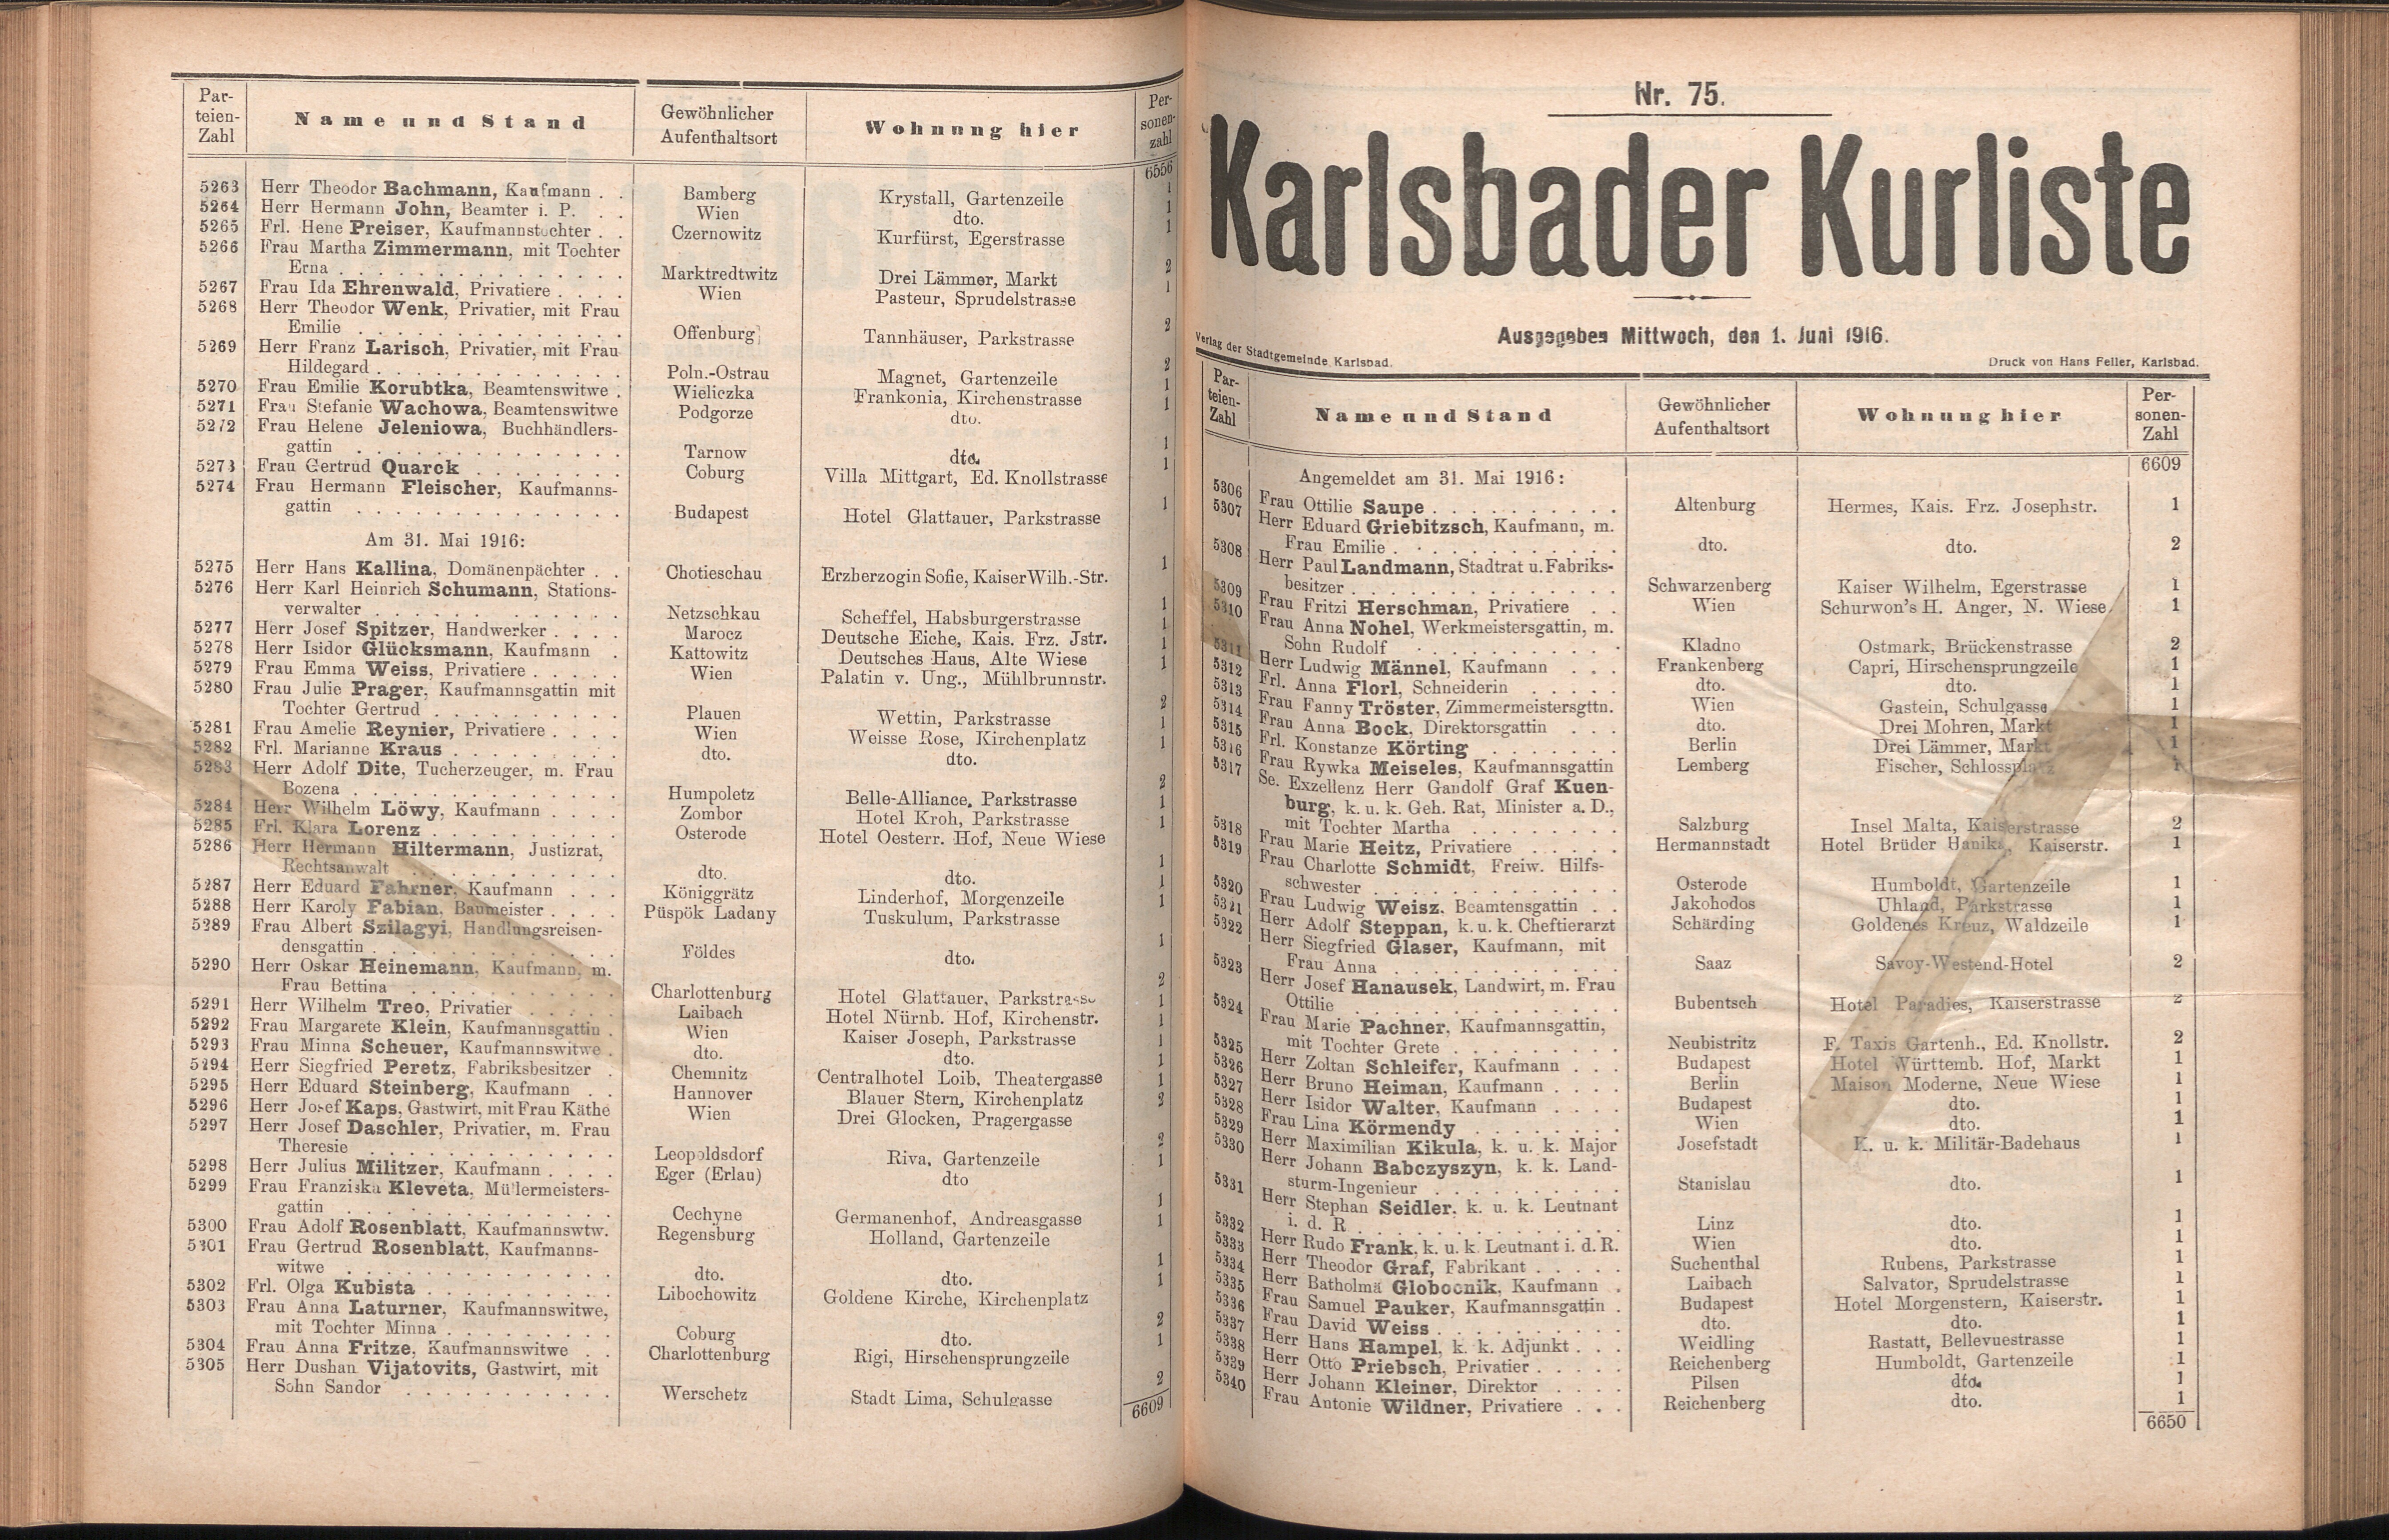 136. soap-kv_knihovna_karlsbader-kurliste-1916_1360